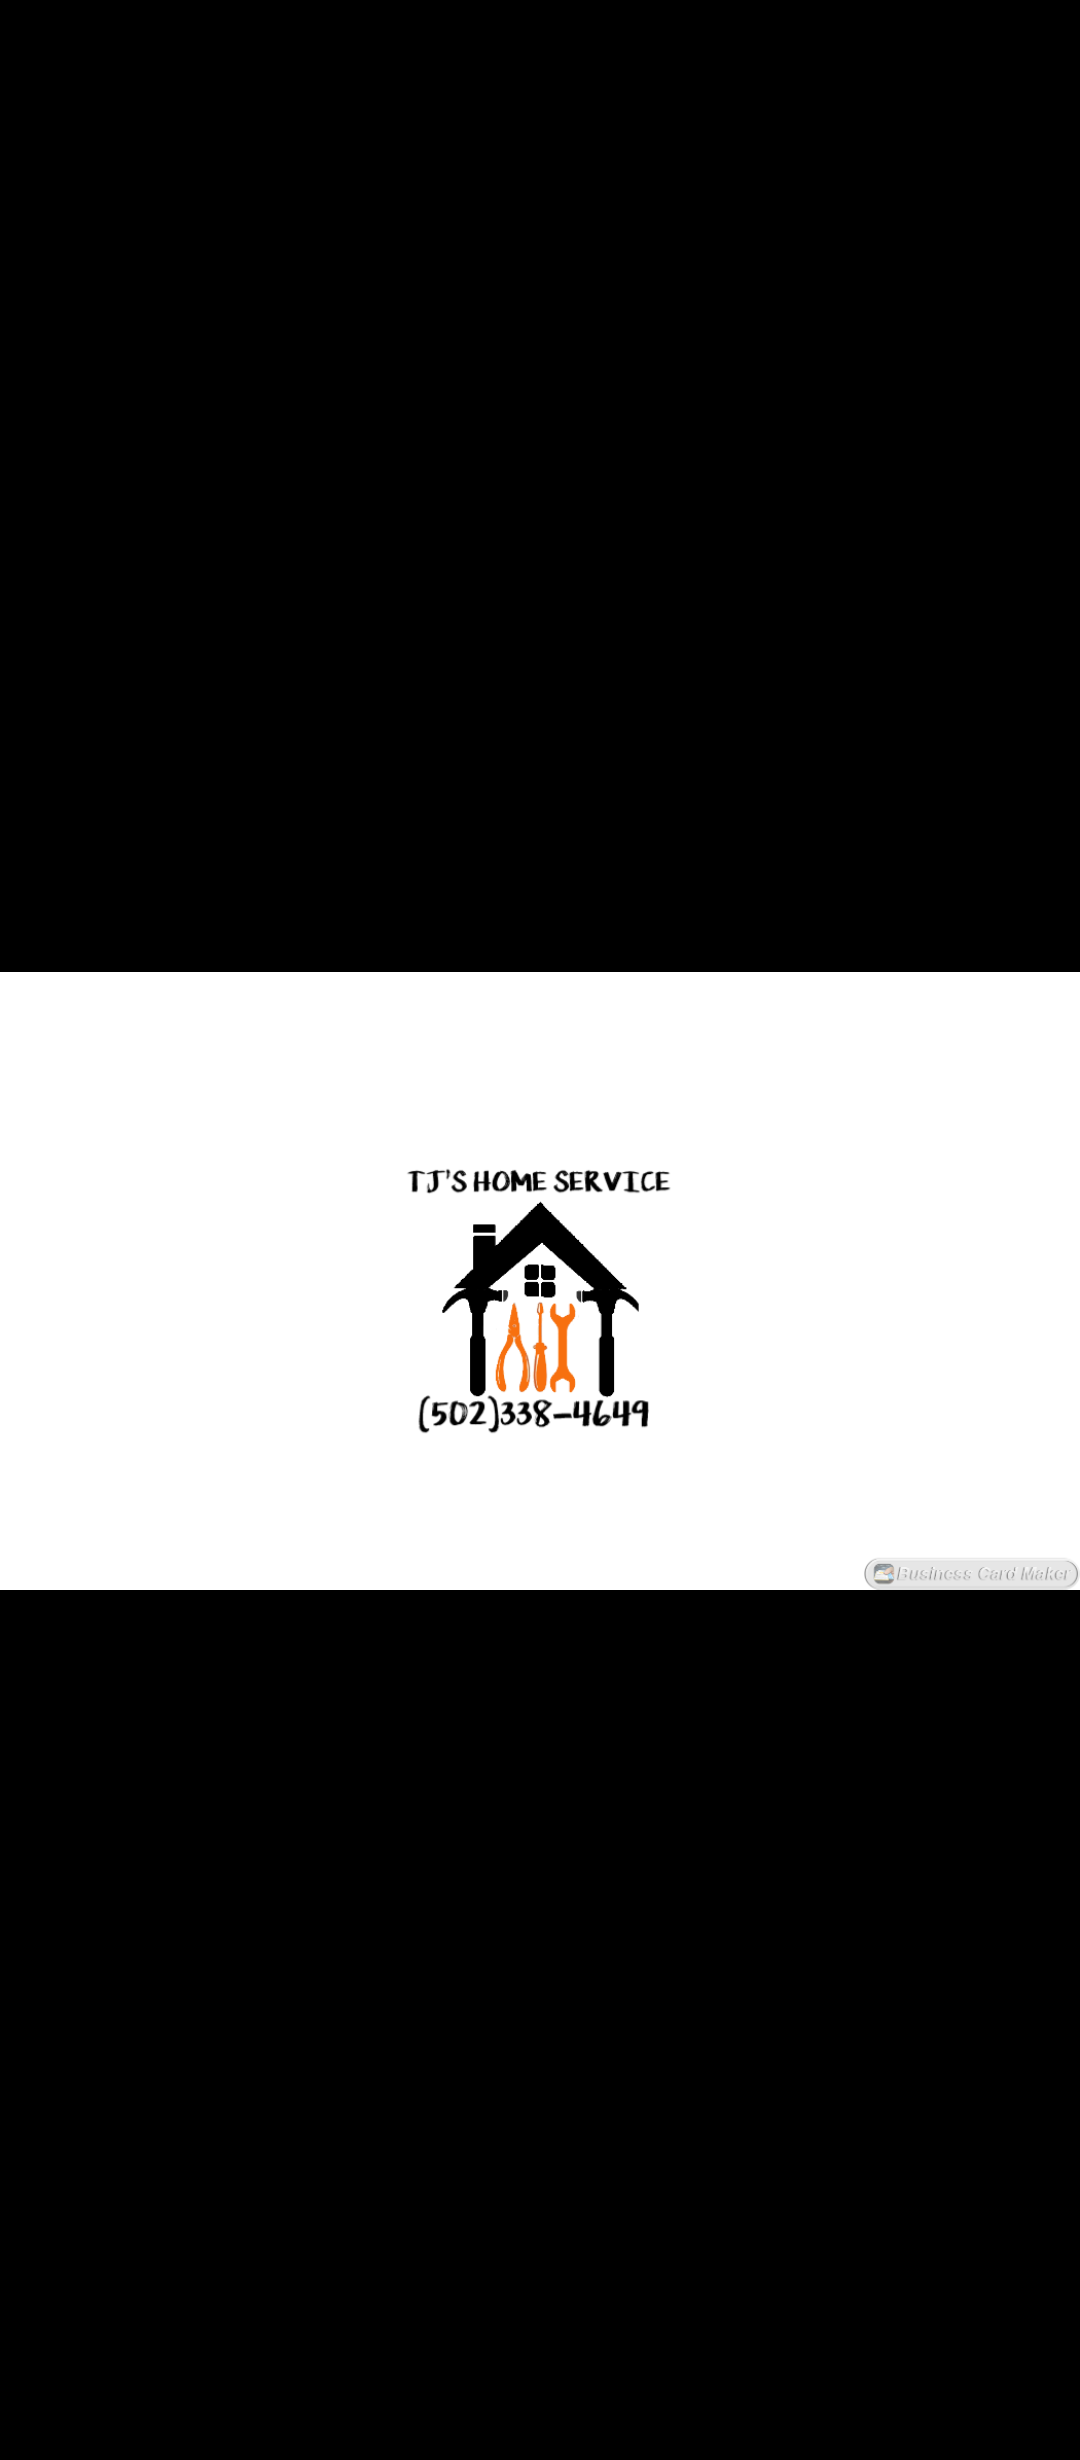 TJ's Home Service Logo